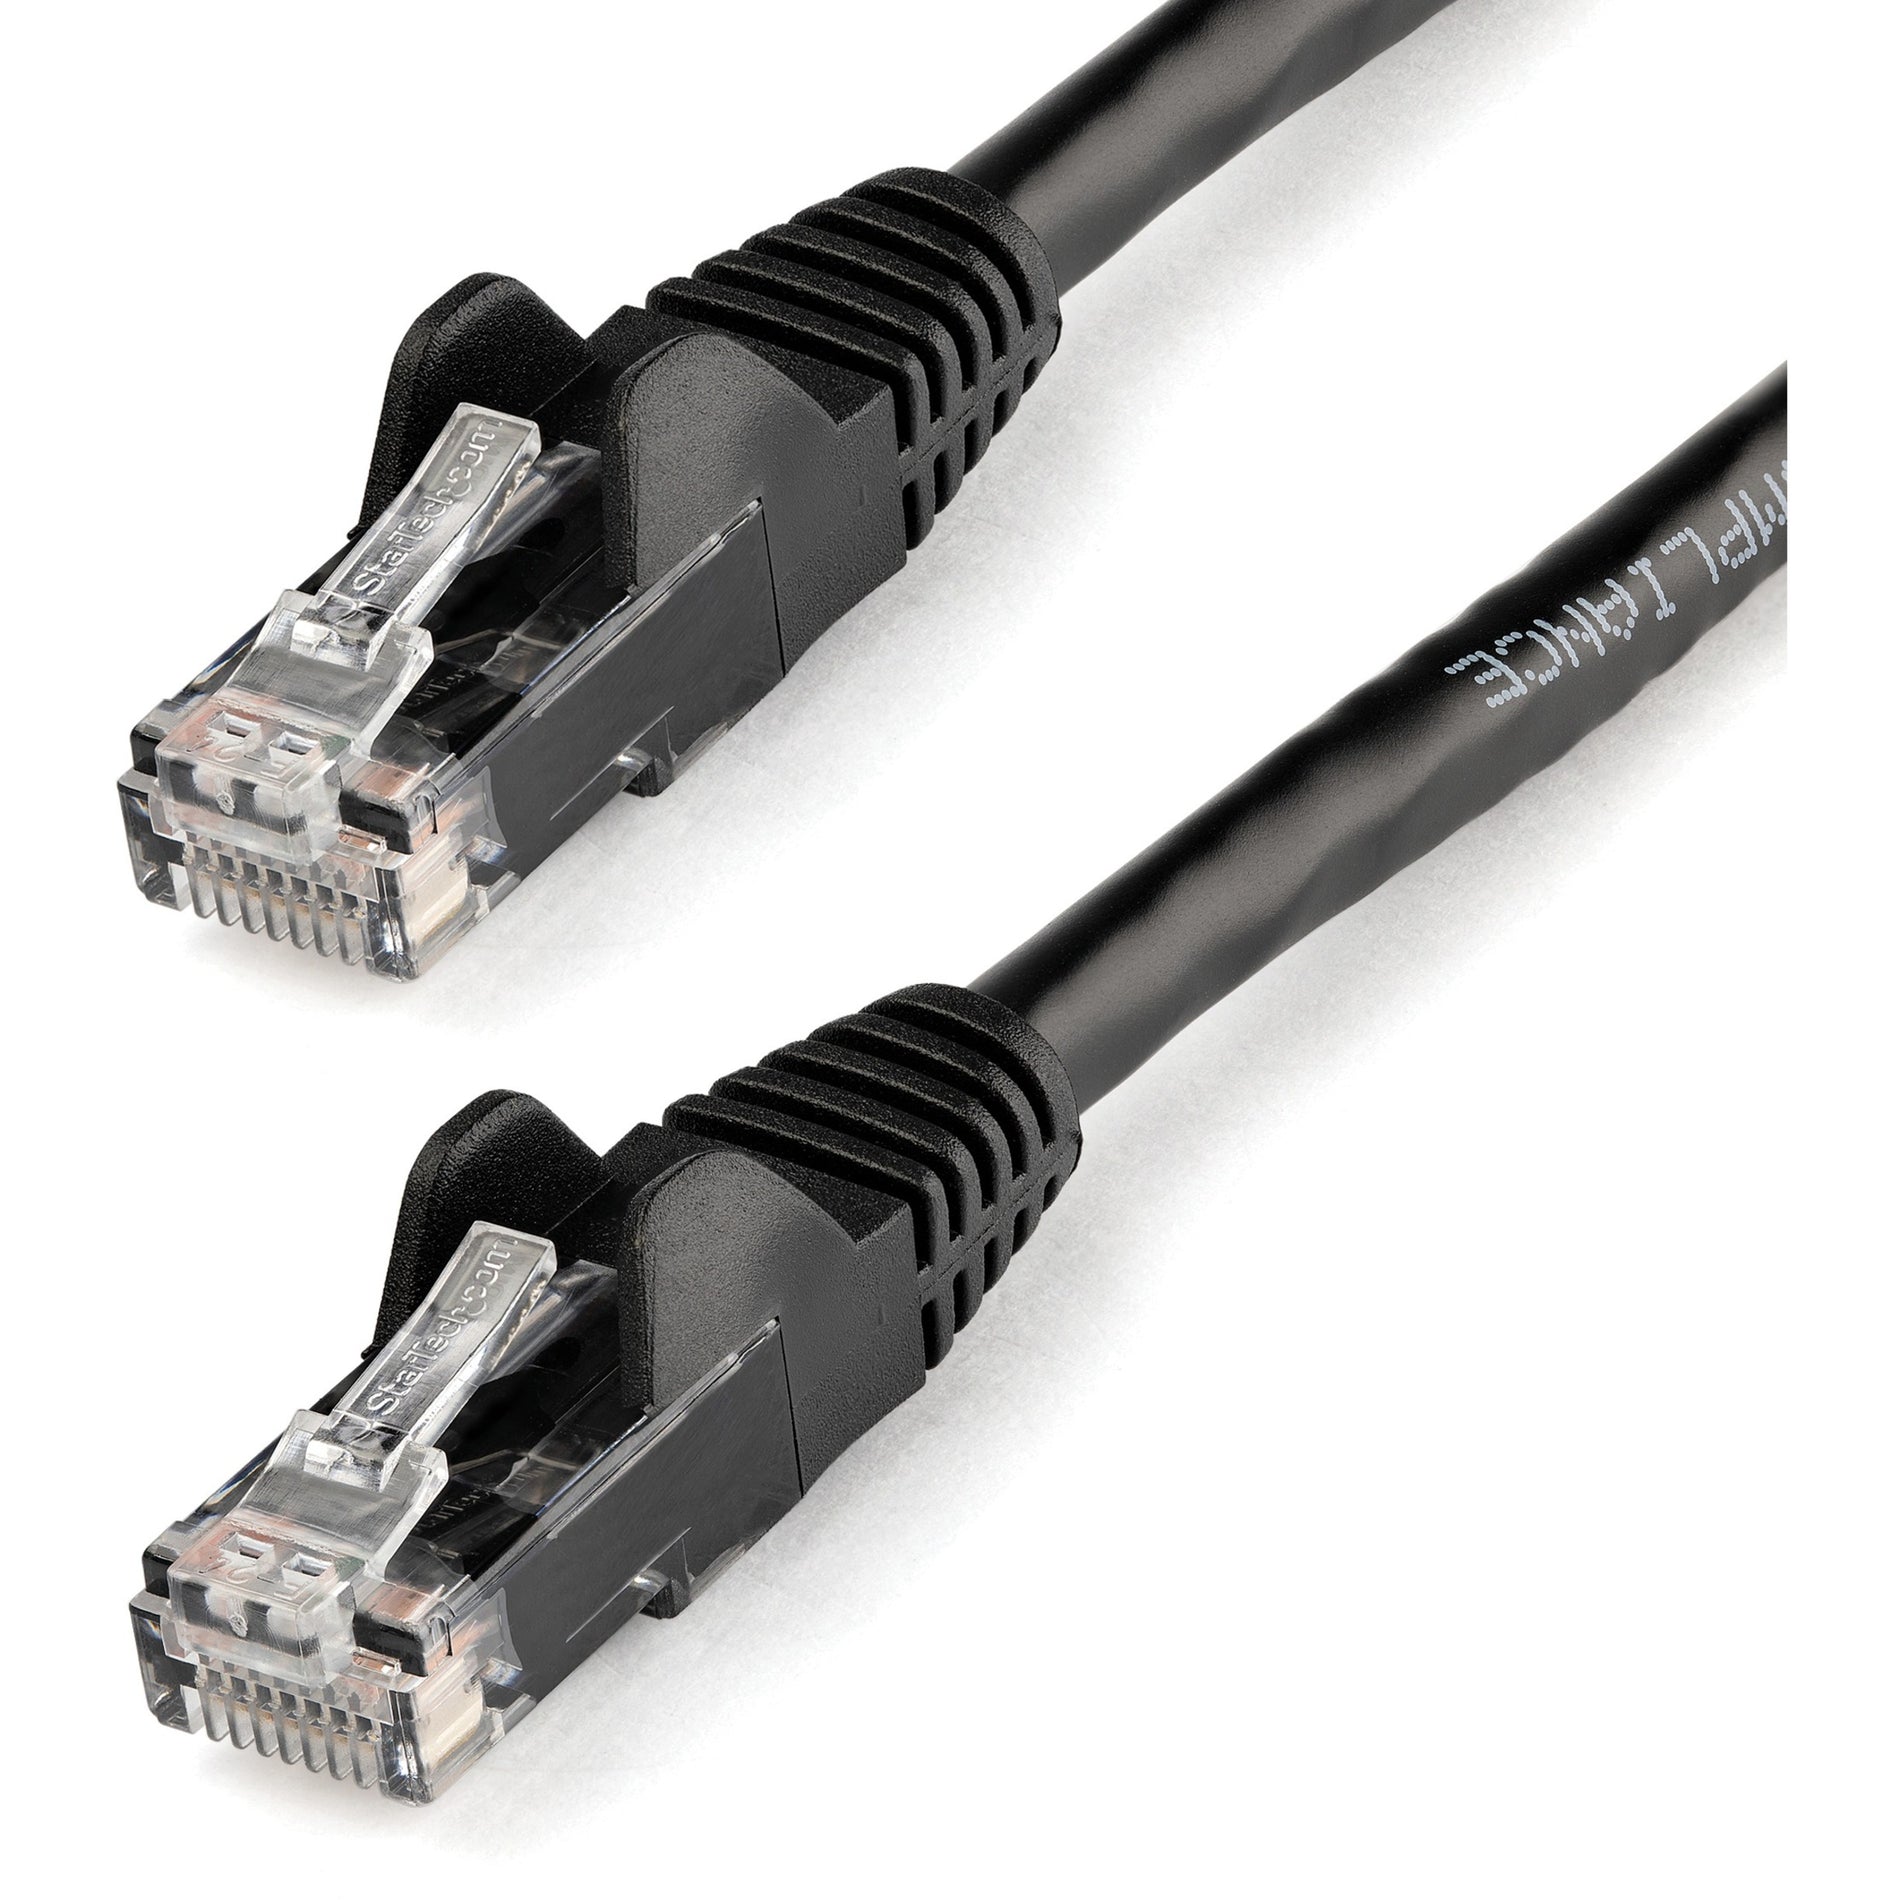 StarTech.com N6PATCH9BK Cat6 Patch Cable, 9 ft Black Ethernet Cable with Snagless RJ45 Connectors